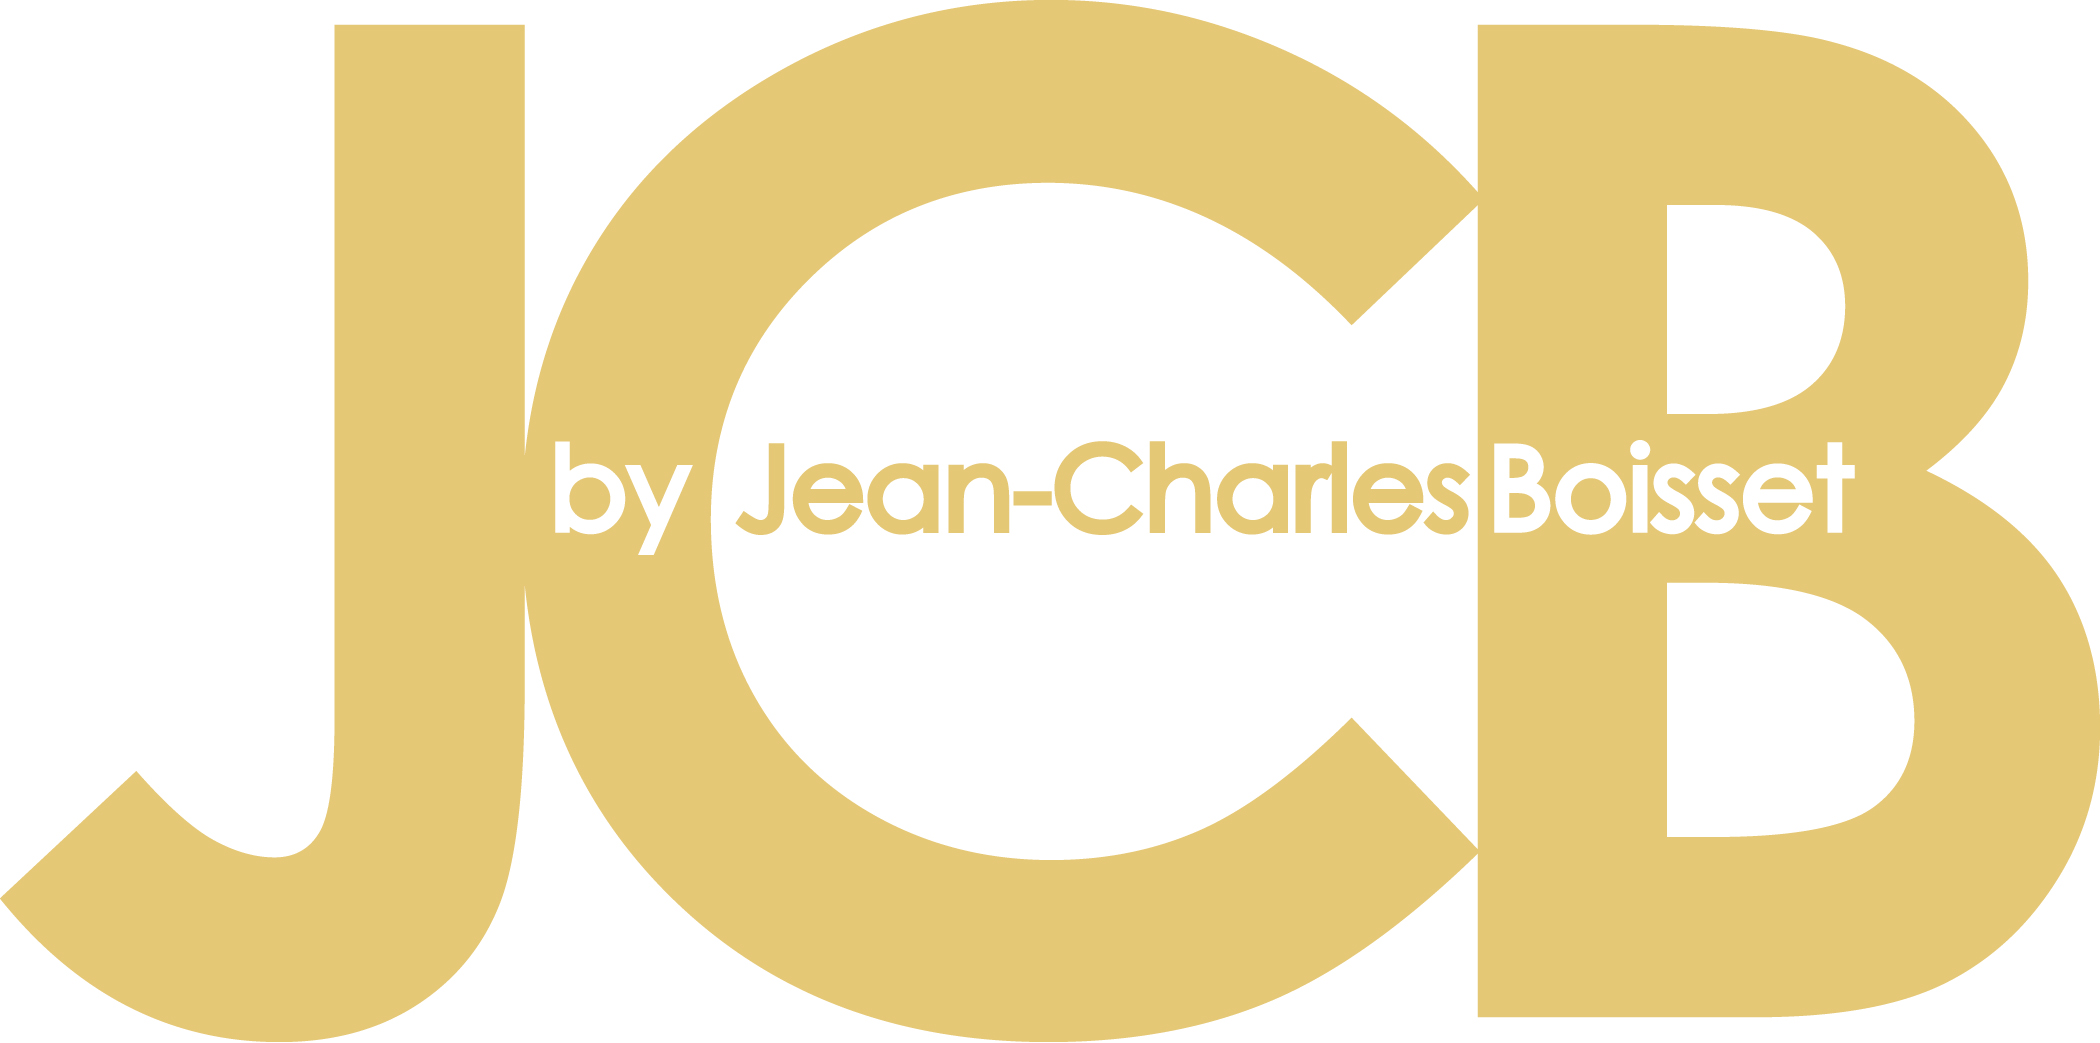 JCB Collection logo